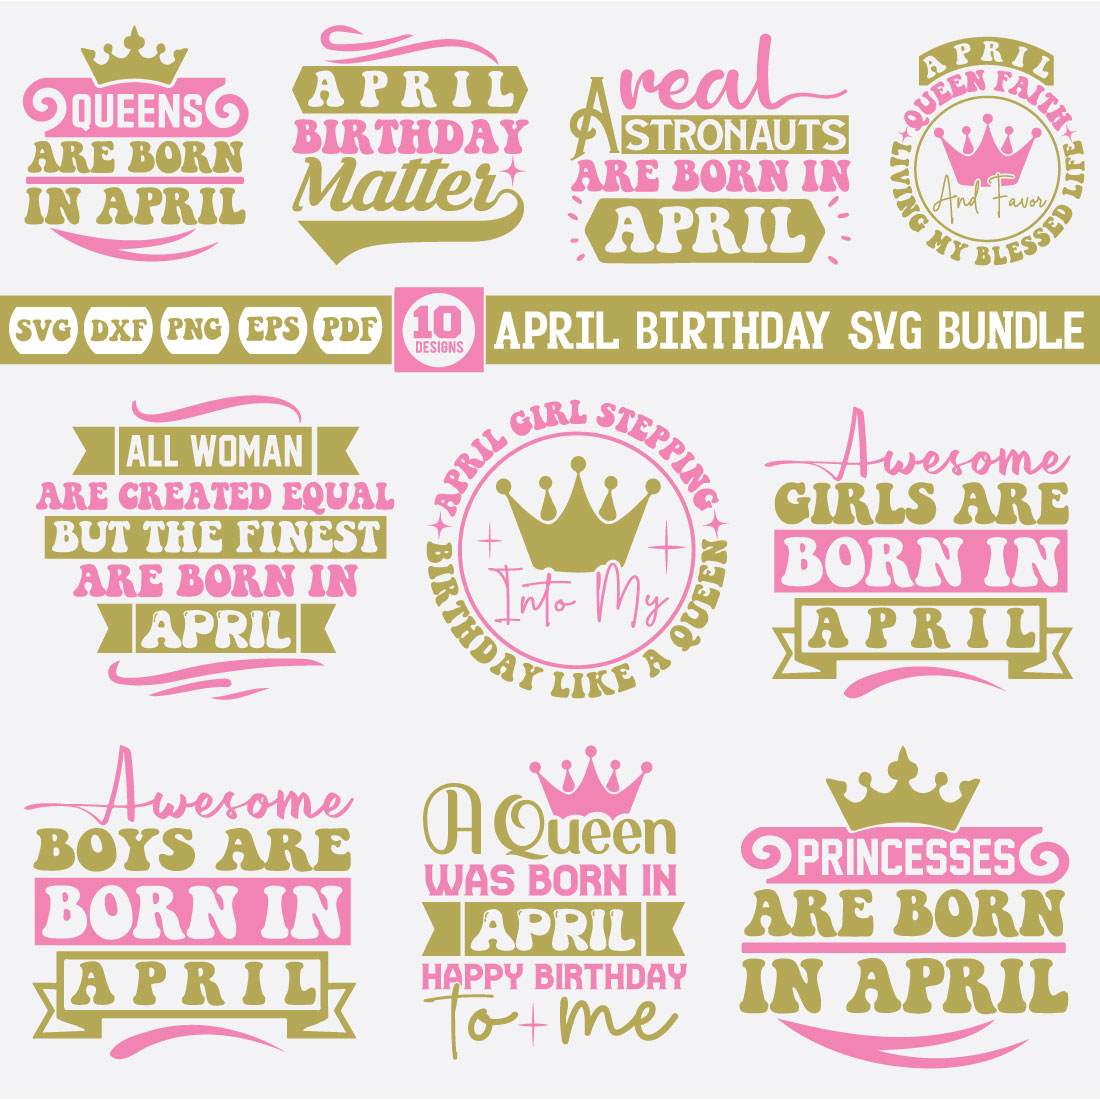 April birthday svg bundle preview image.